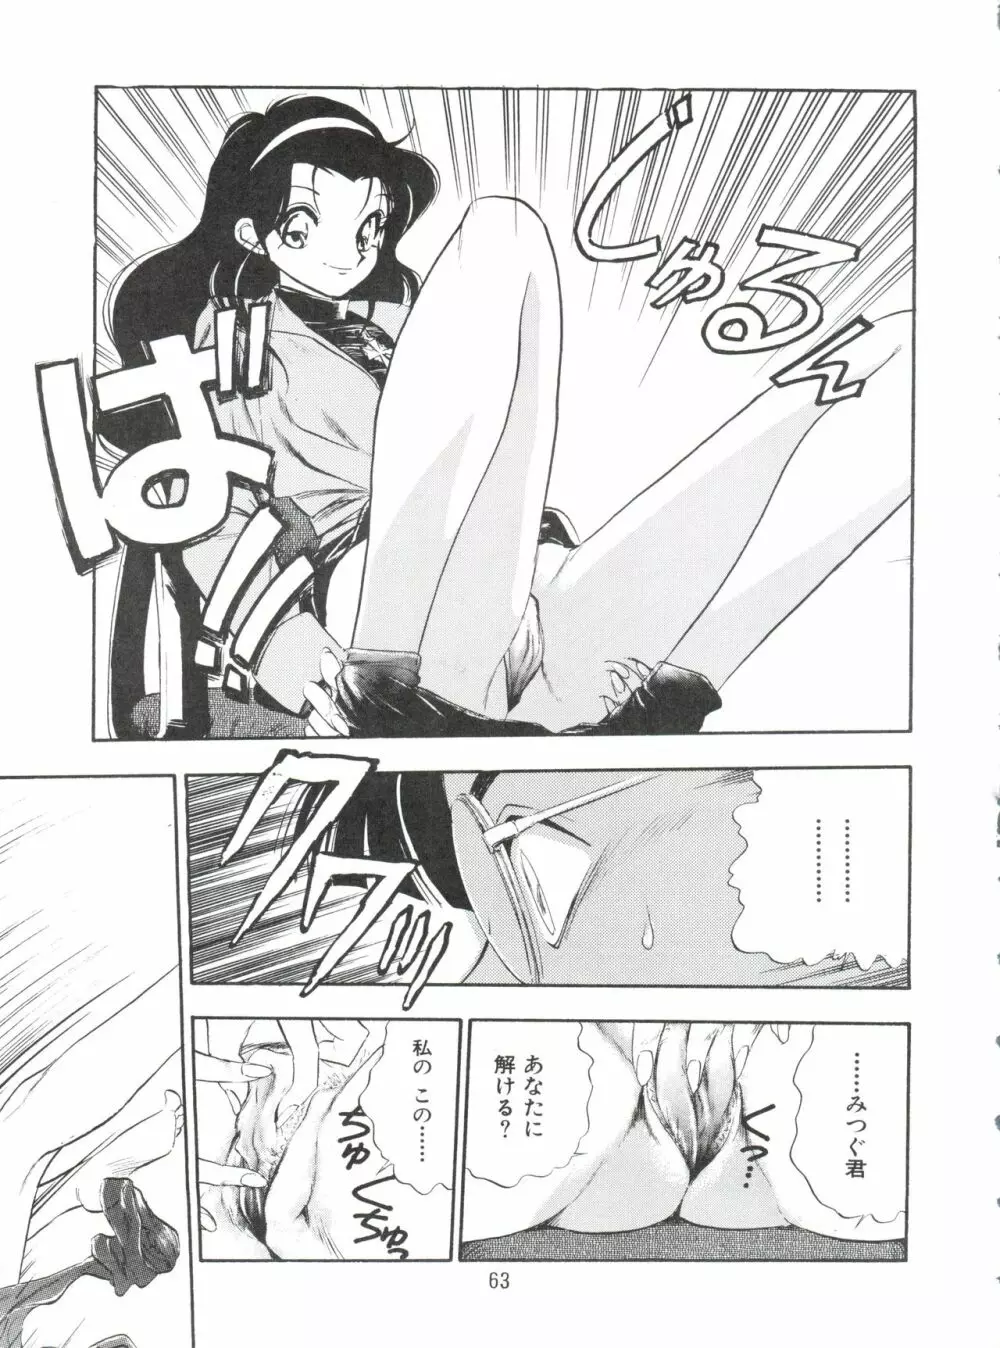 1997 WINTER 電撃犬王 64ページ